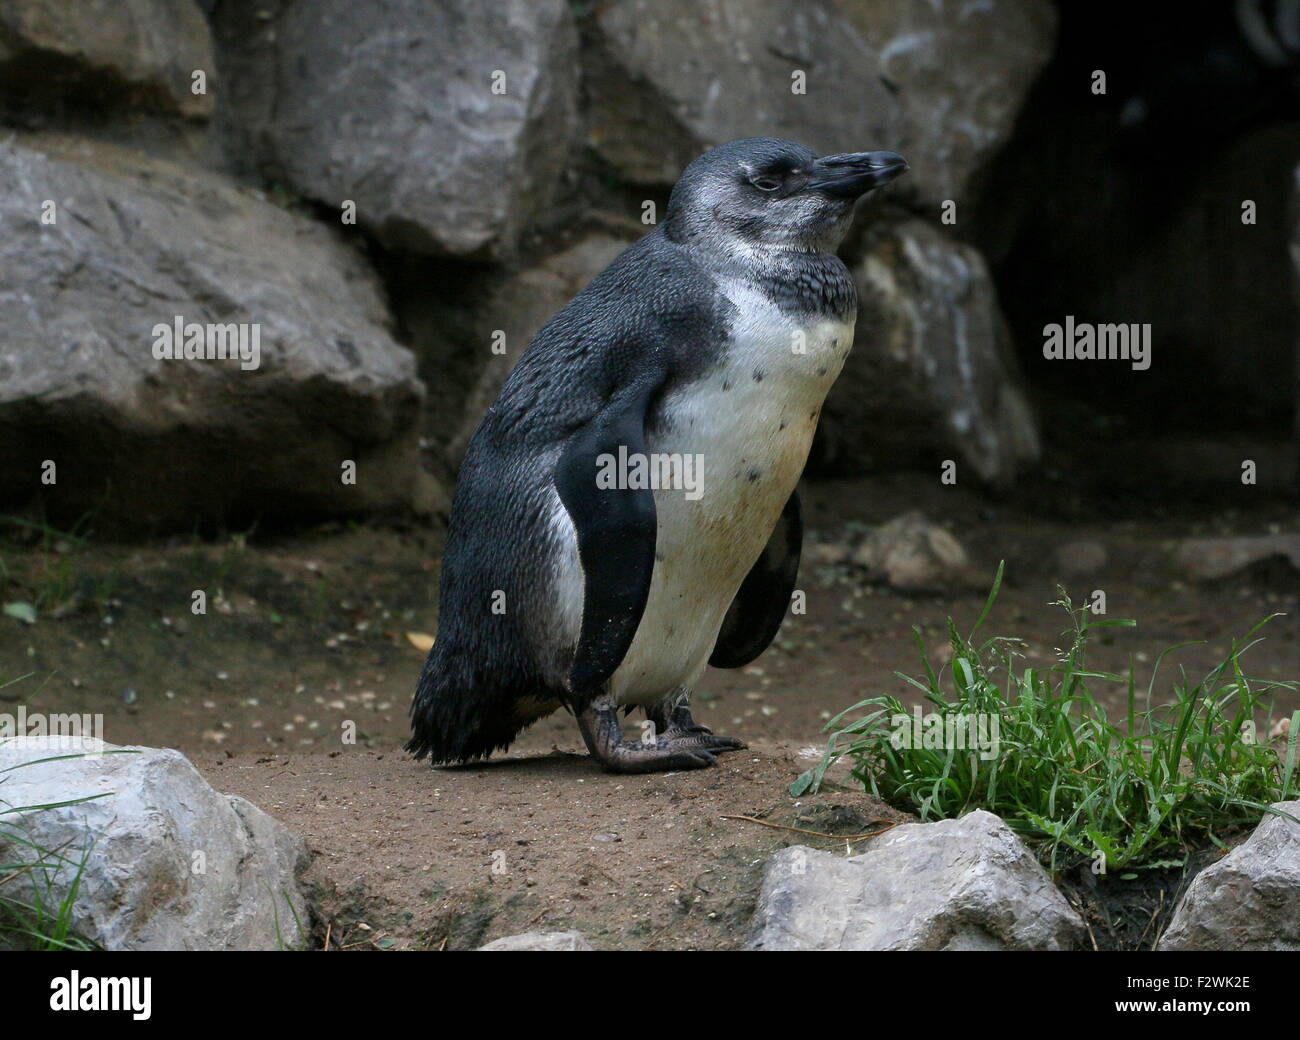 Juvenile Black footed penguin (Spheniscus demersus), a.k.a. African penguin or Jackass penguin Stock Photo